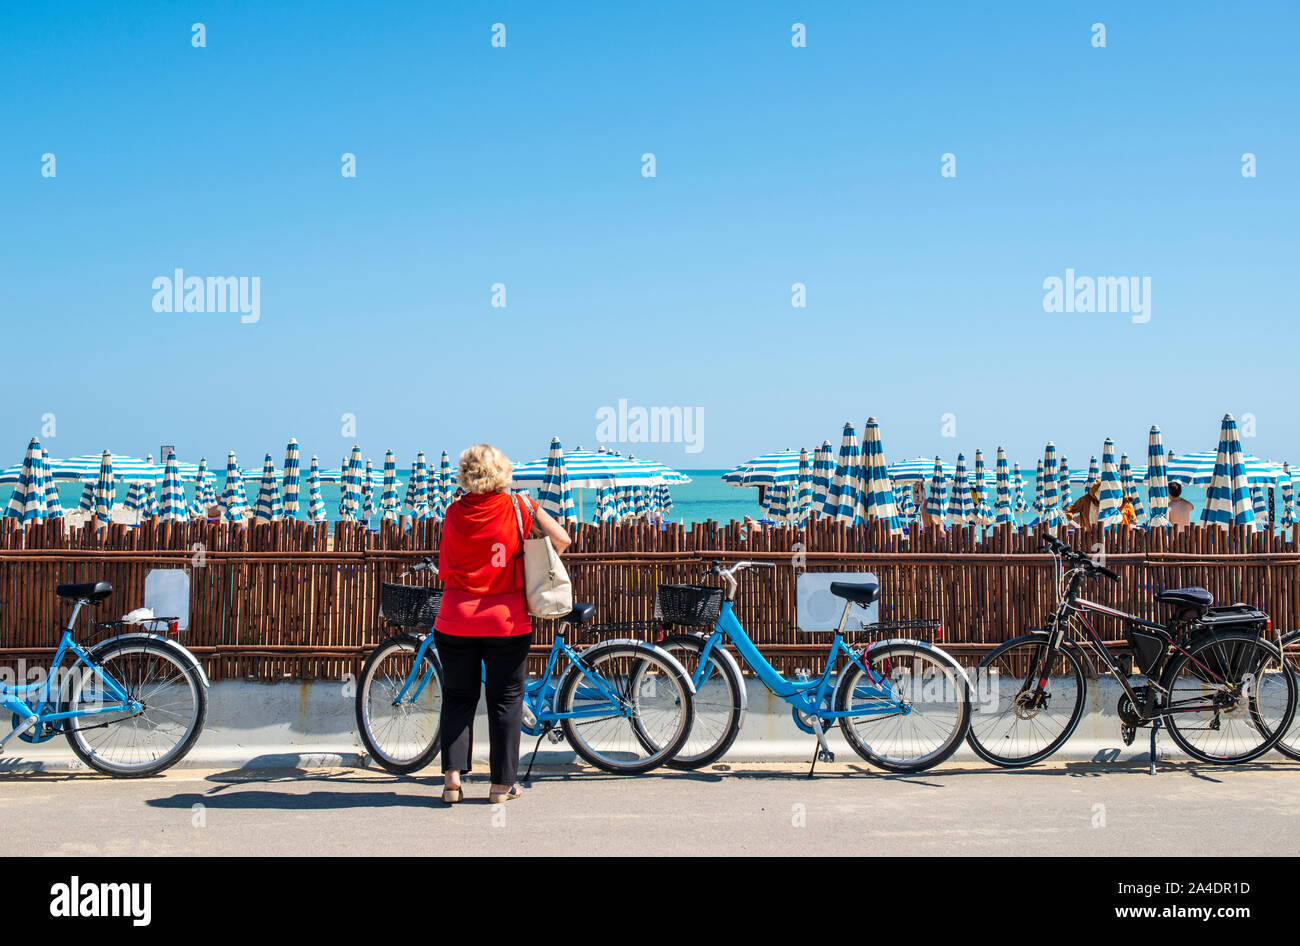 Rental bikes on the beach. Blue bicycles on the street. Many beach umbrellas. Stock Photo